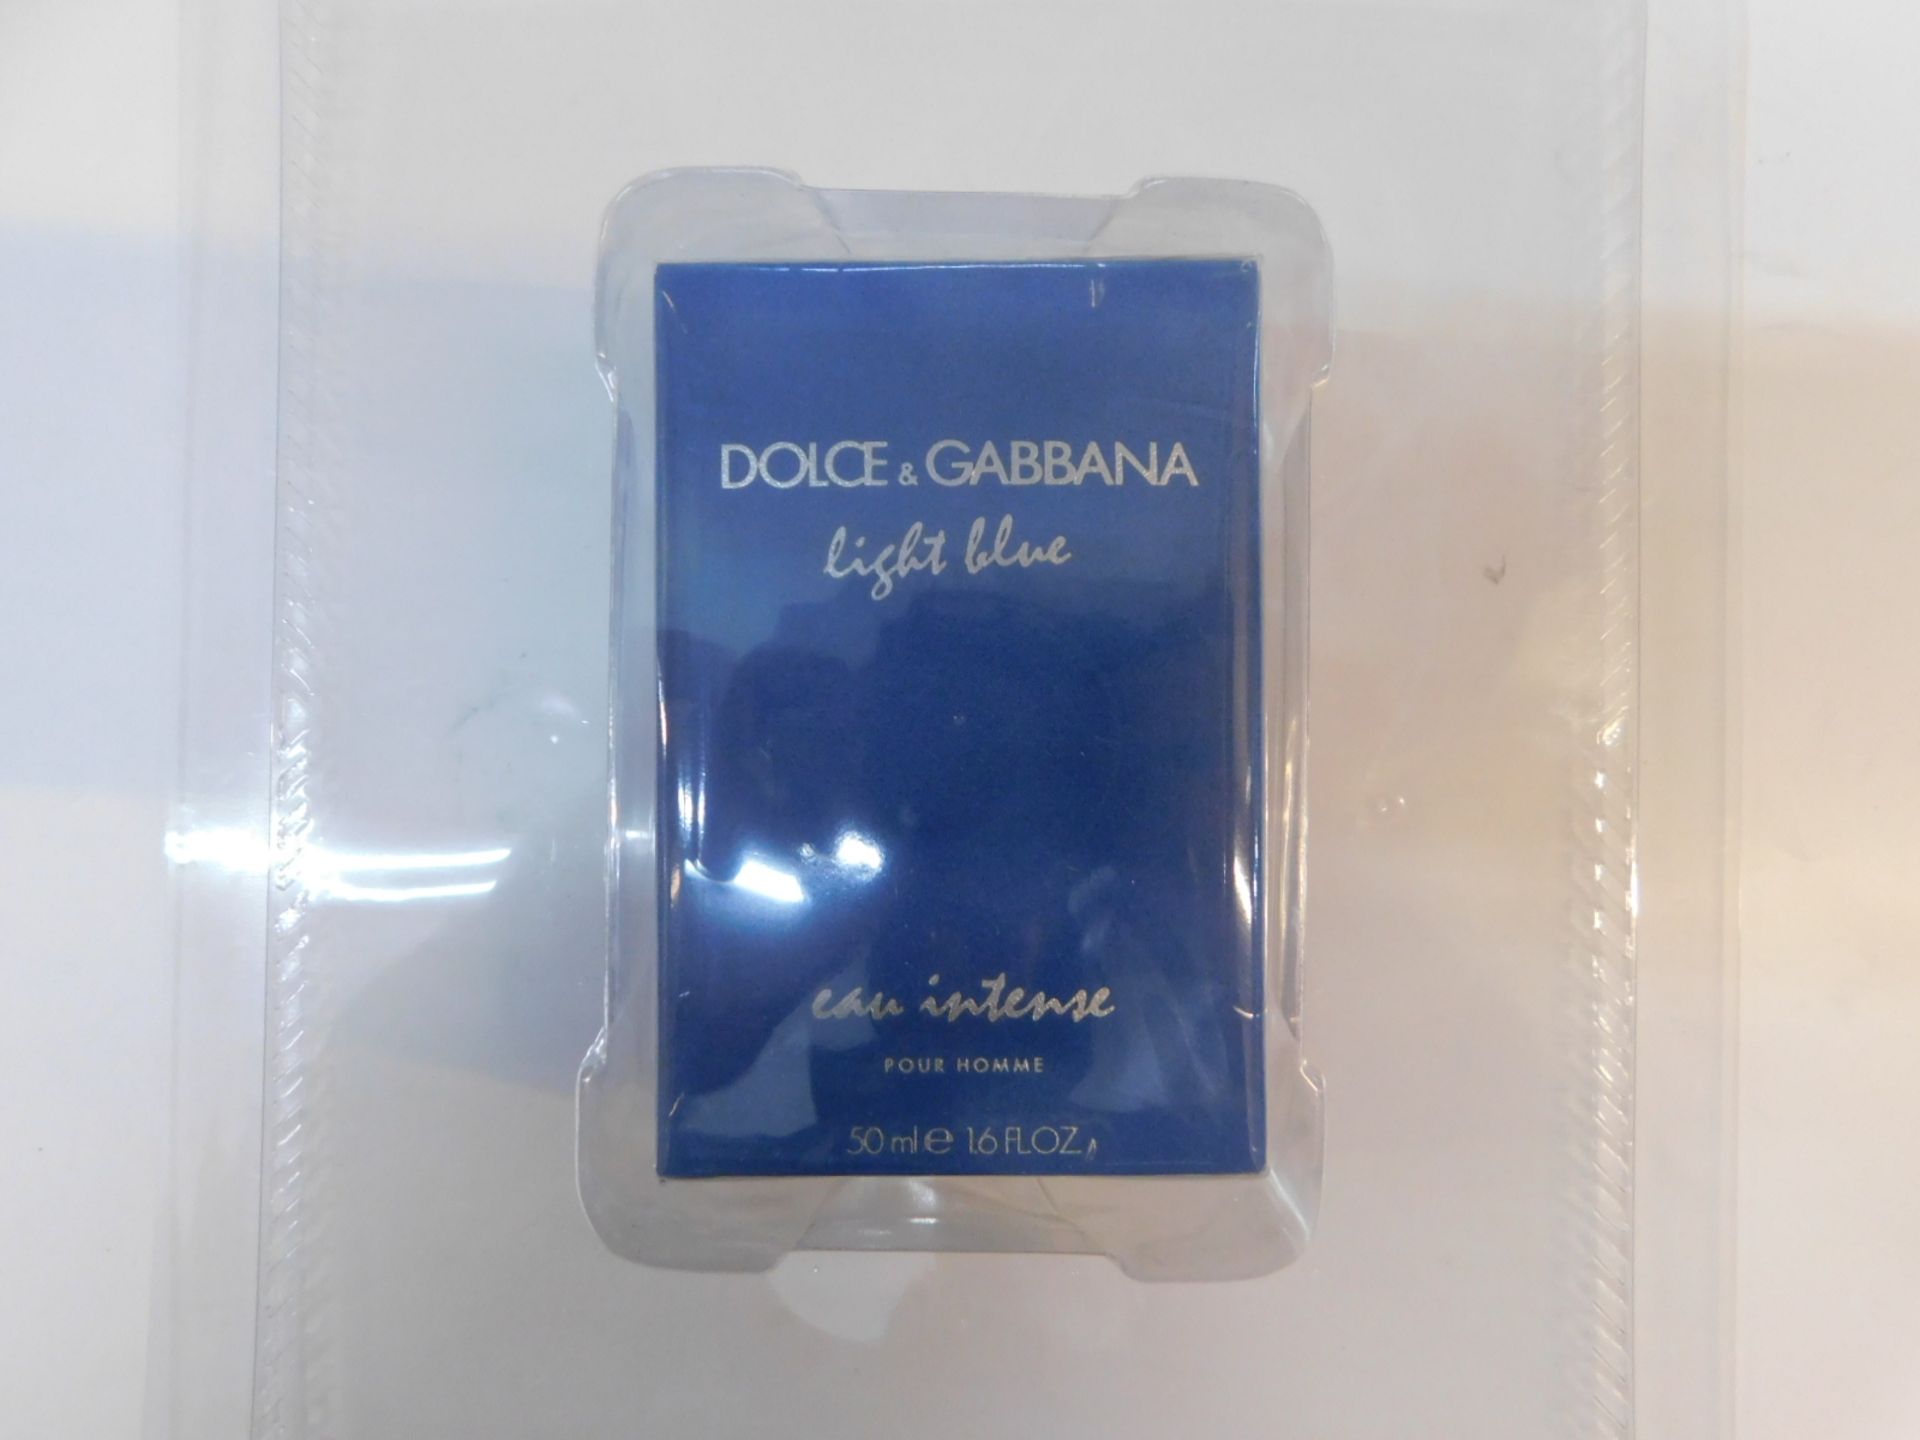 1 BRAND NEW SEALED BOXED DOLCE & GABBANA LIGHT BLUE INTENSE EAU DE PARFUM FOR MEN 50ML RRP Â£64.99